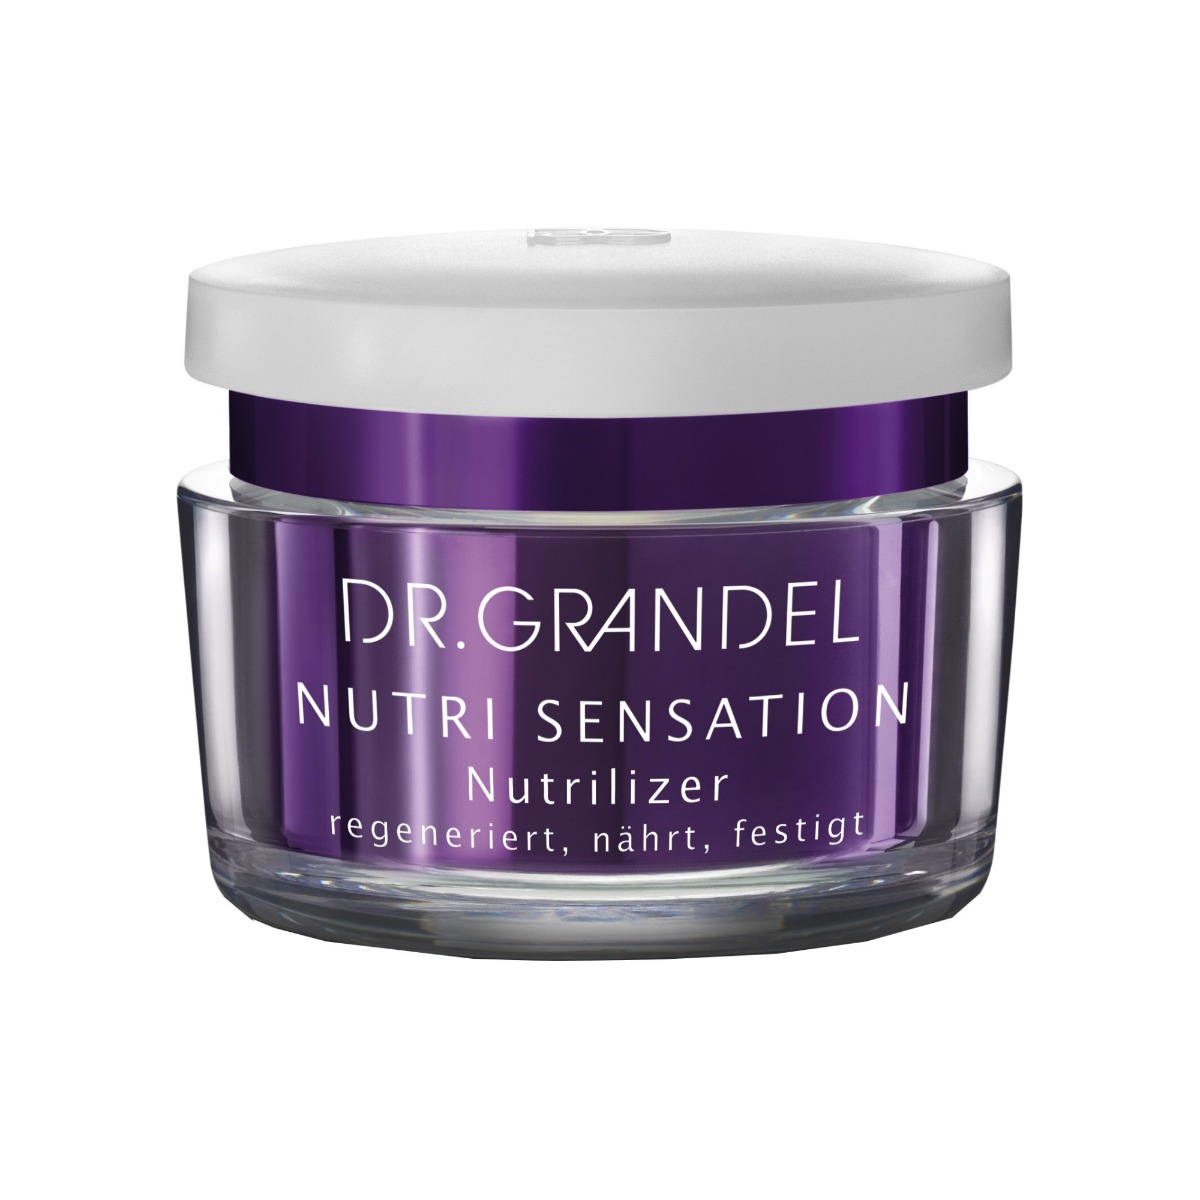 Crema nutritiva Nutrilizer Nutri Sensation, 50ml, Dr.Grandel